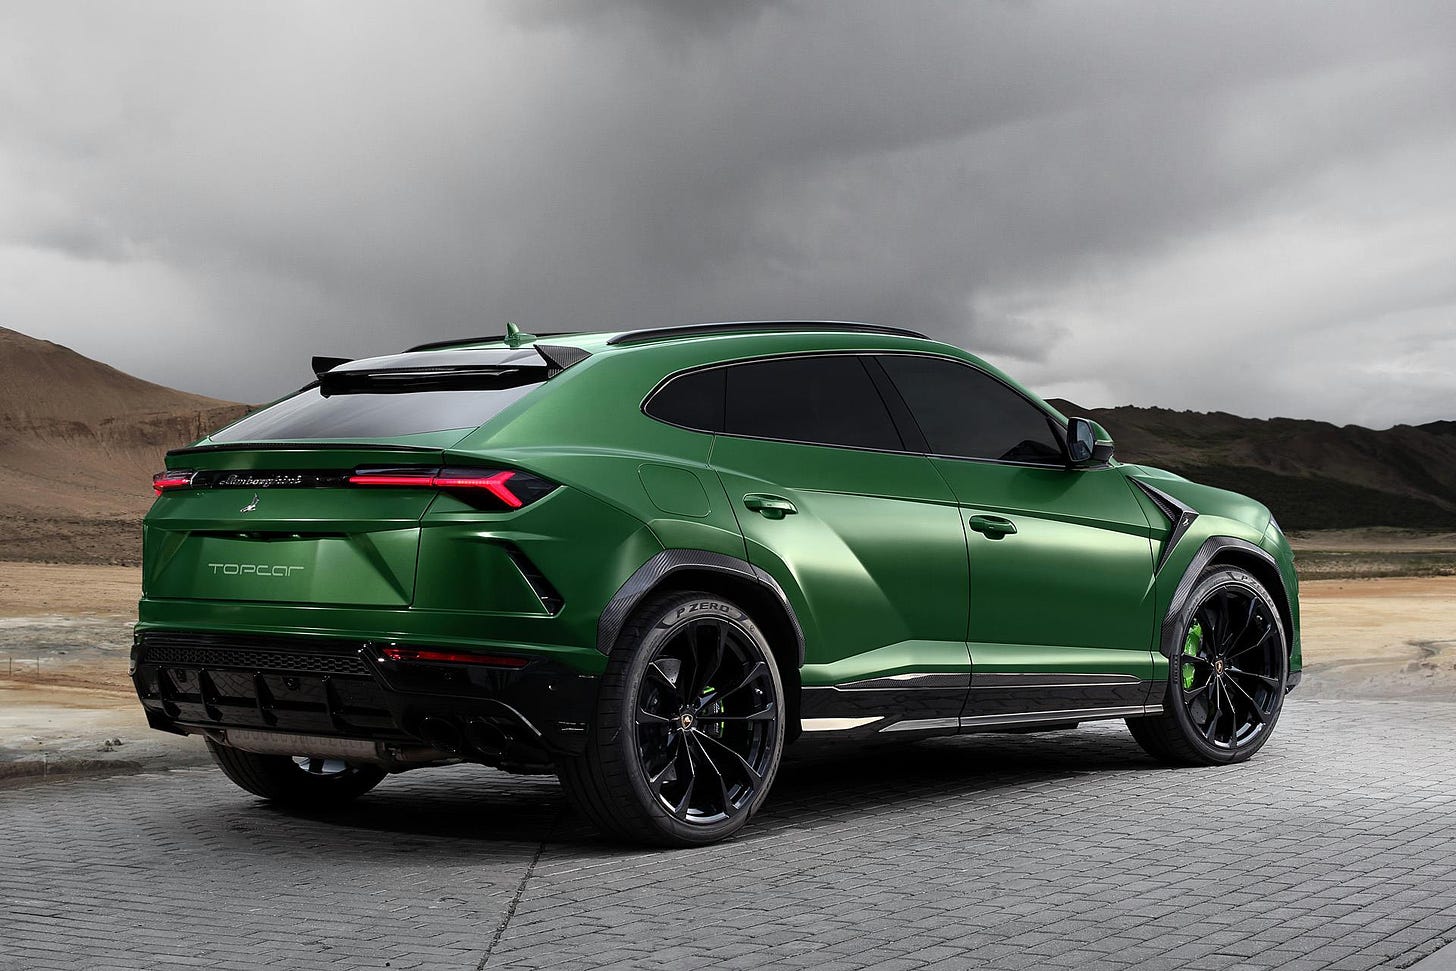 TopCar Lamborghini Urus Revealed with Military Green Paint and Camo Carbon! - GTspirit